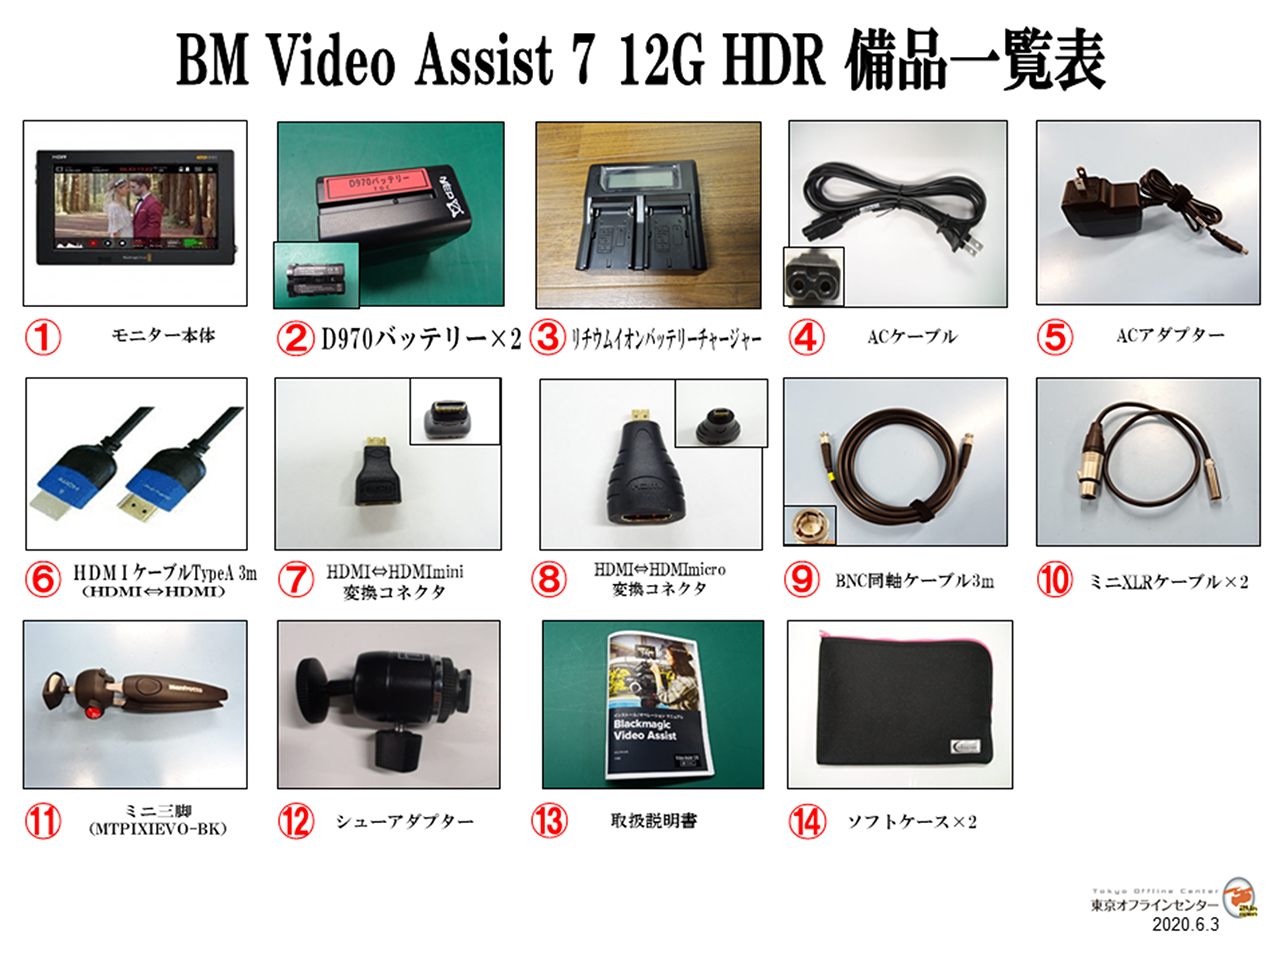 Video assist 7 12G HDR 美品！